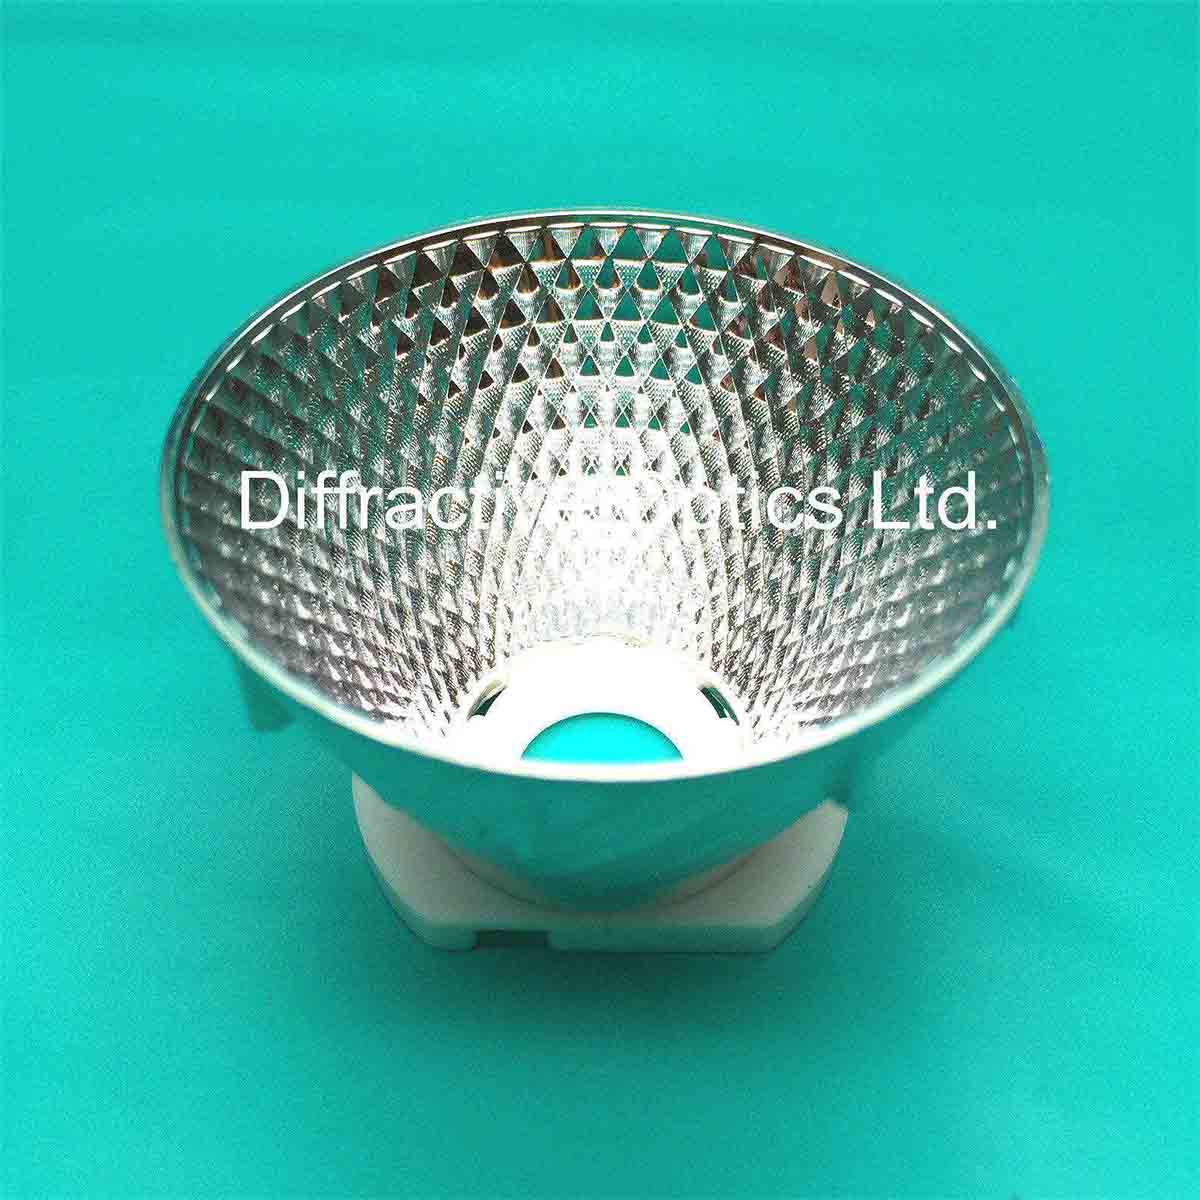 P14103 diameter 35mm reflective cup